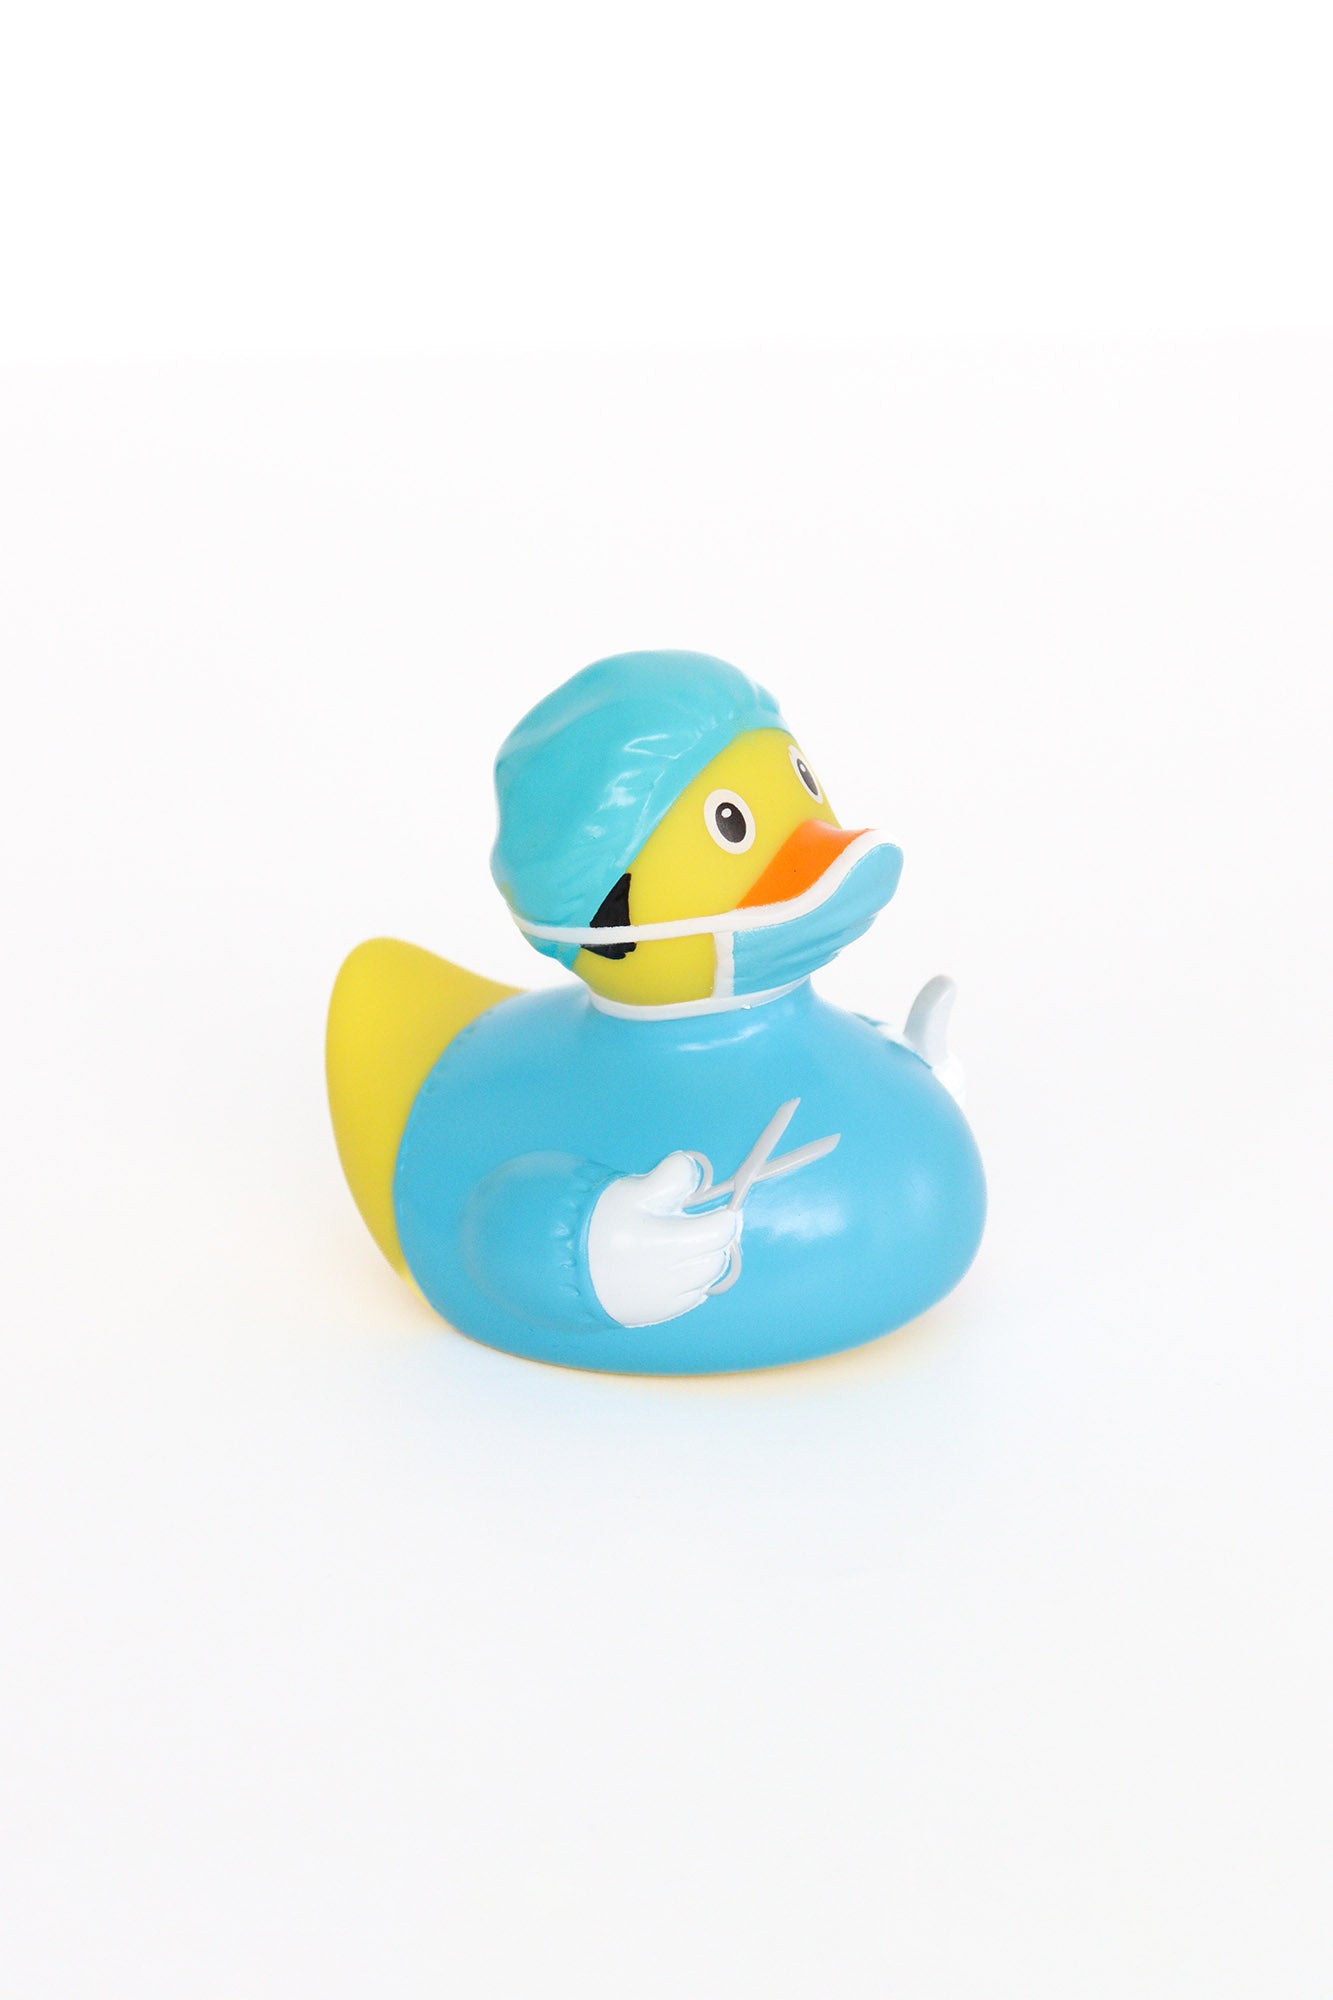 Surgeon plastic duck toy